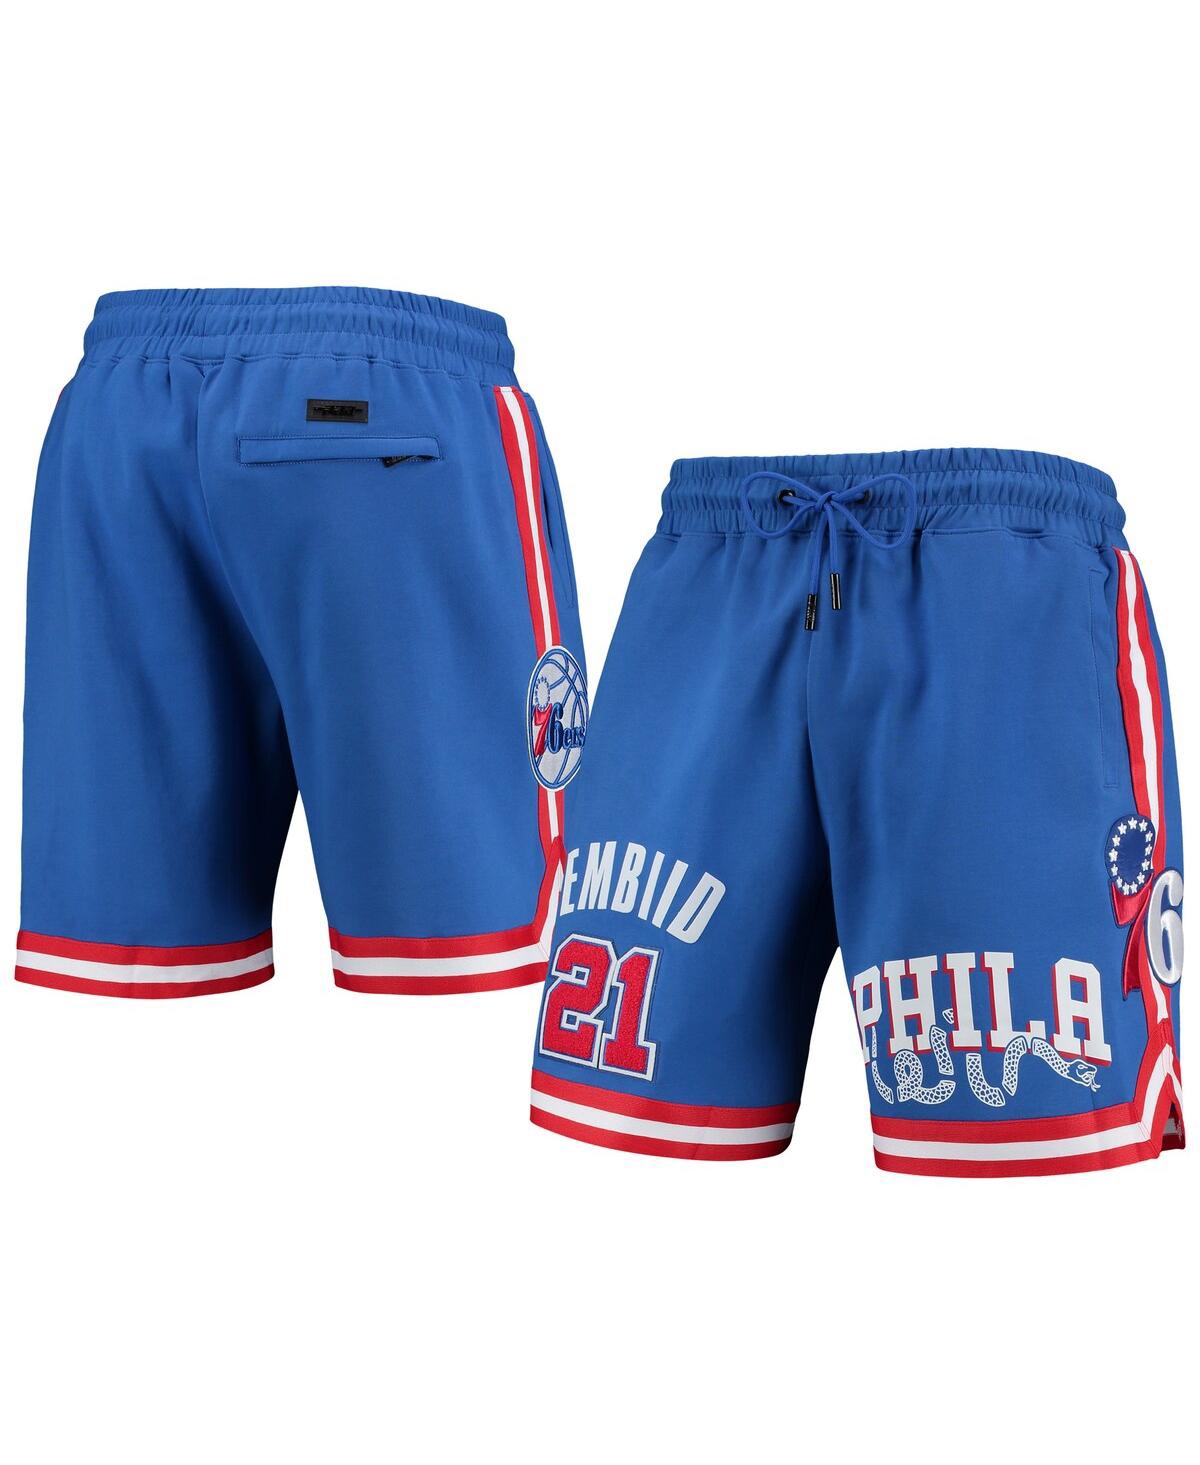 Men's Pro Standard Joel Embiid Royal Philadelphia 76ers Team Player Shorts - Royal